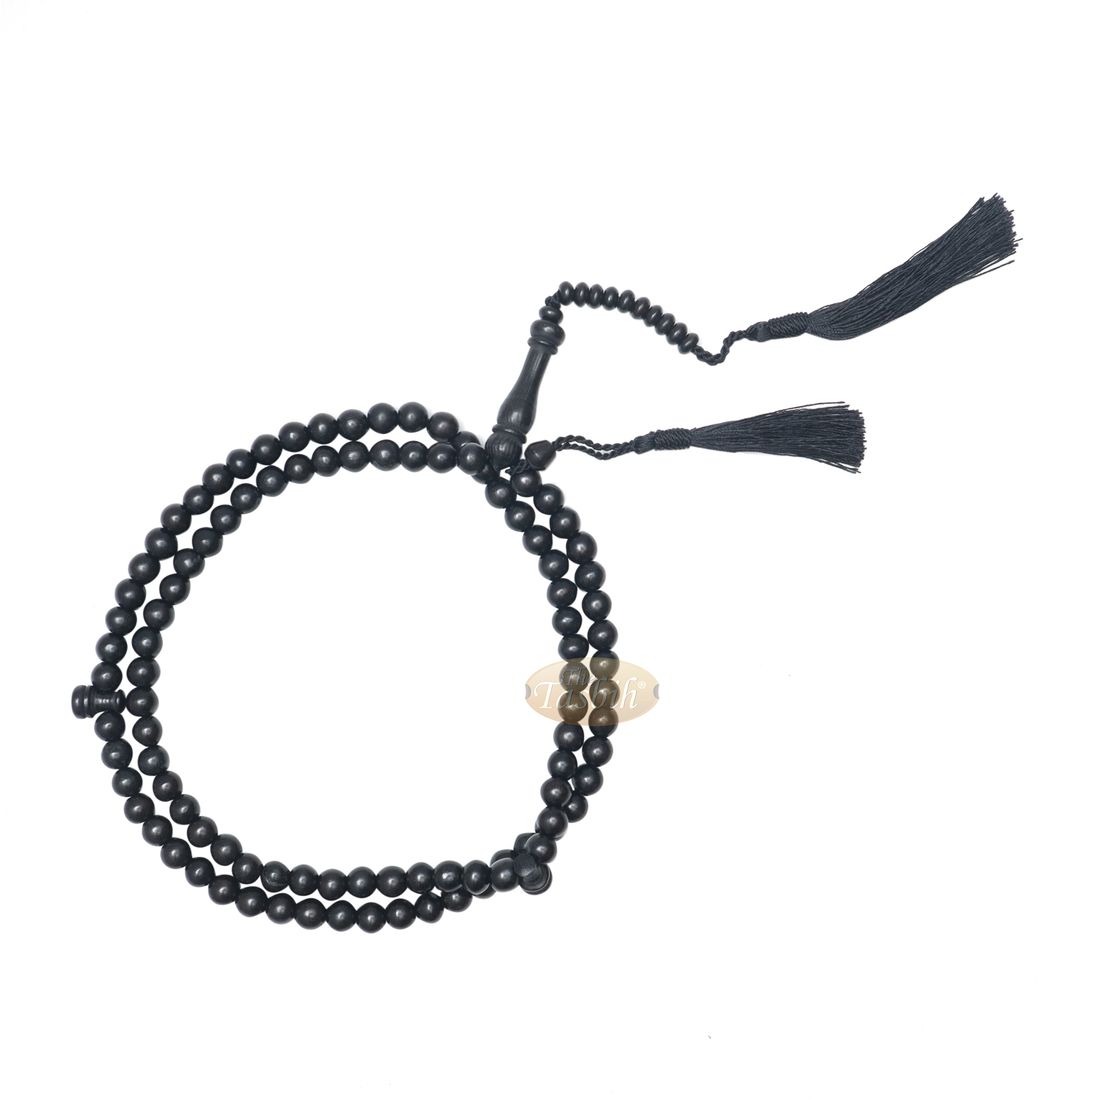 Handcrafted 8mm Black Citrus Wood Tasbih 99-beads with Black Tassel